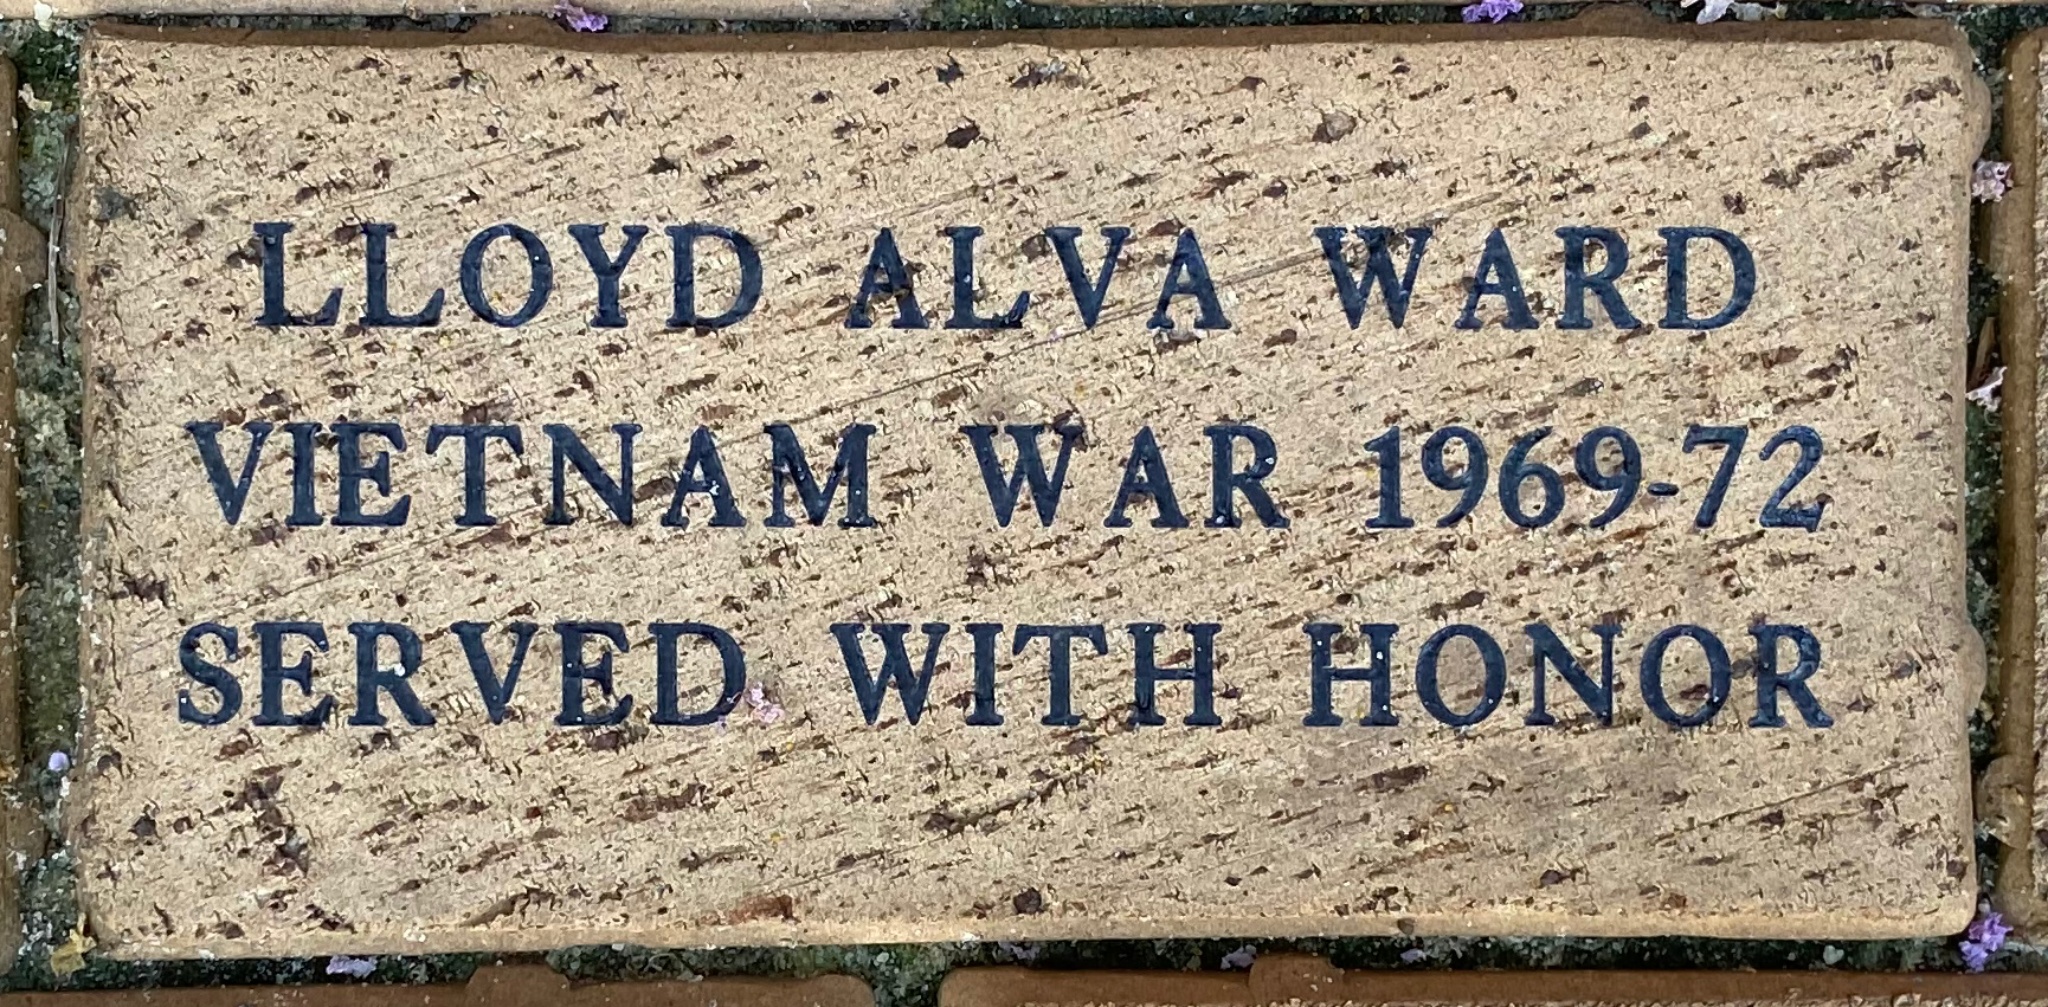 LLOYD ALVA WARD VIETNAM WAR 1969-72 SERVED WITH HONOR